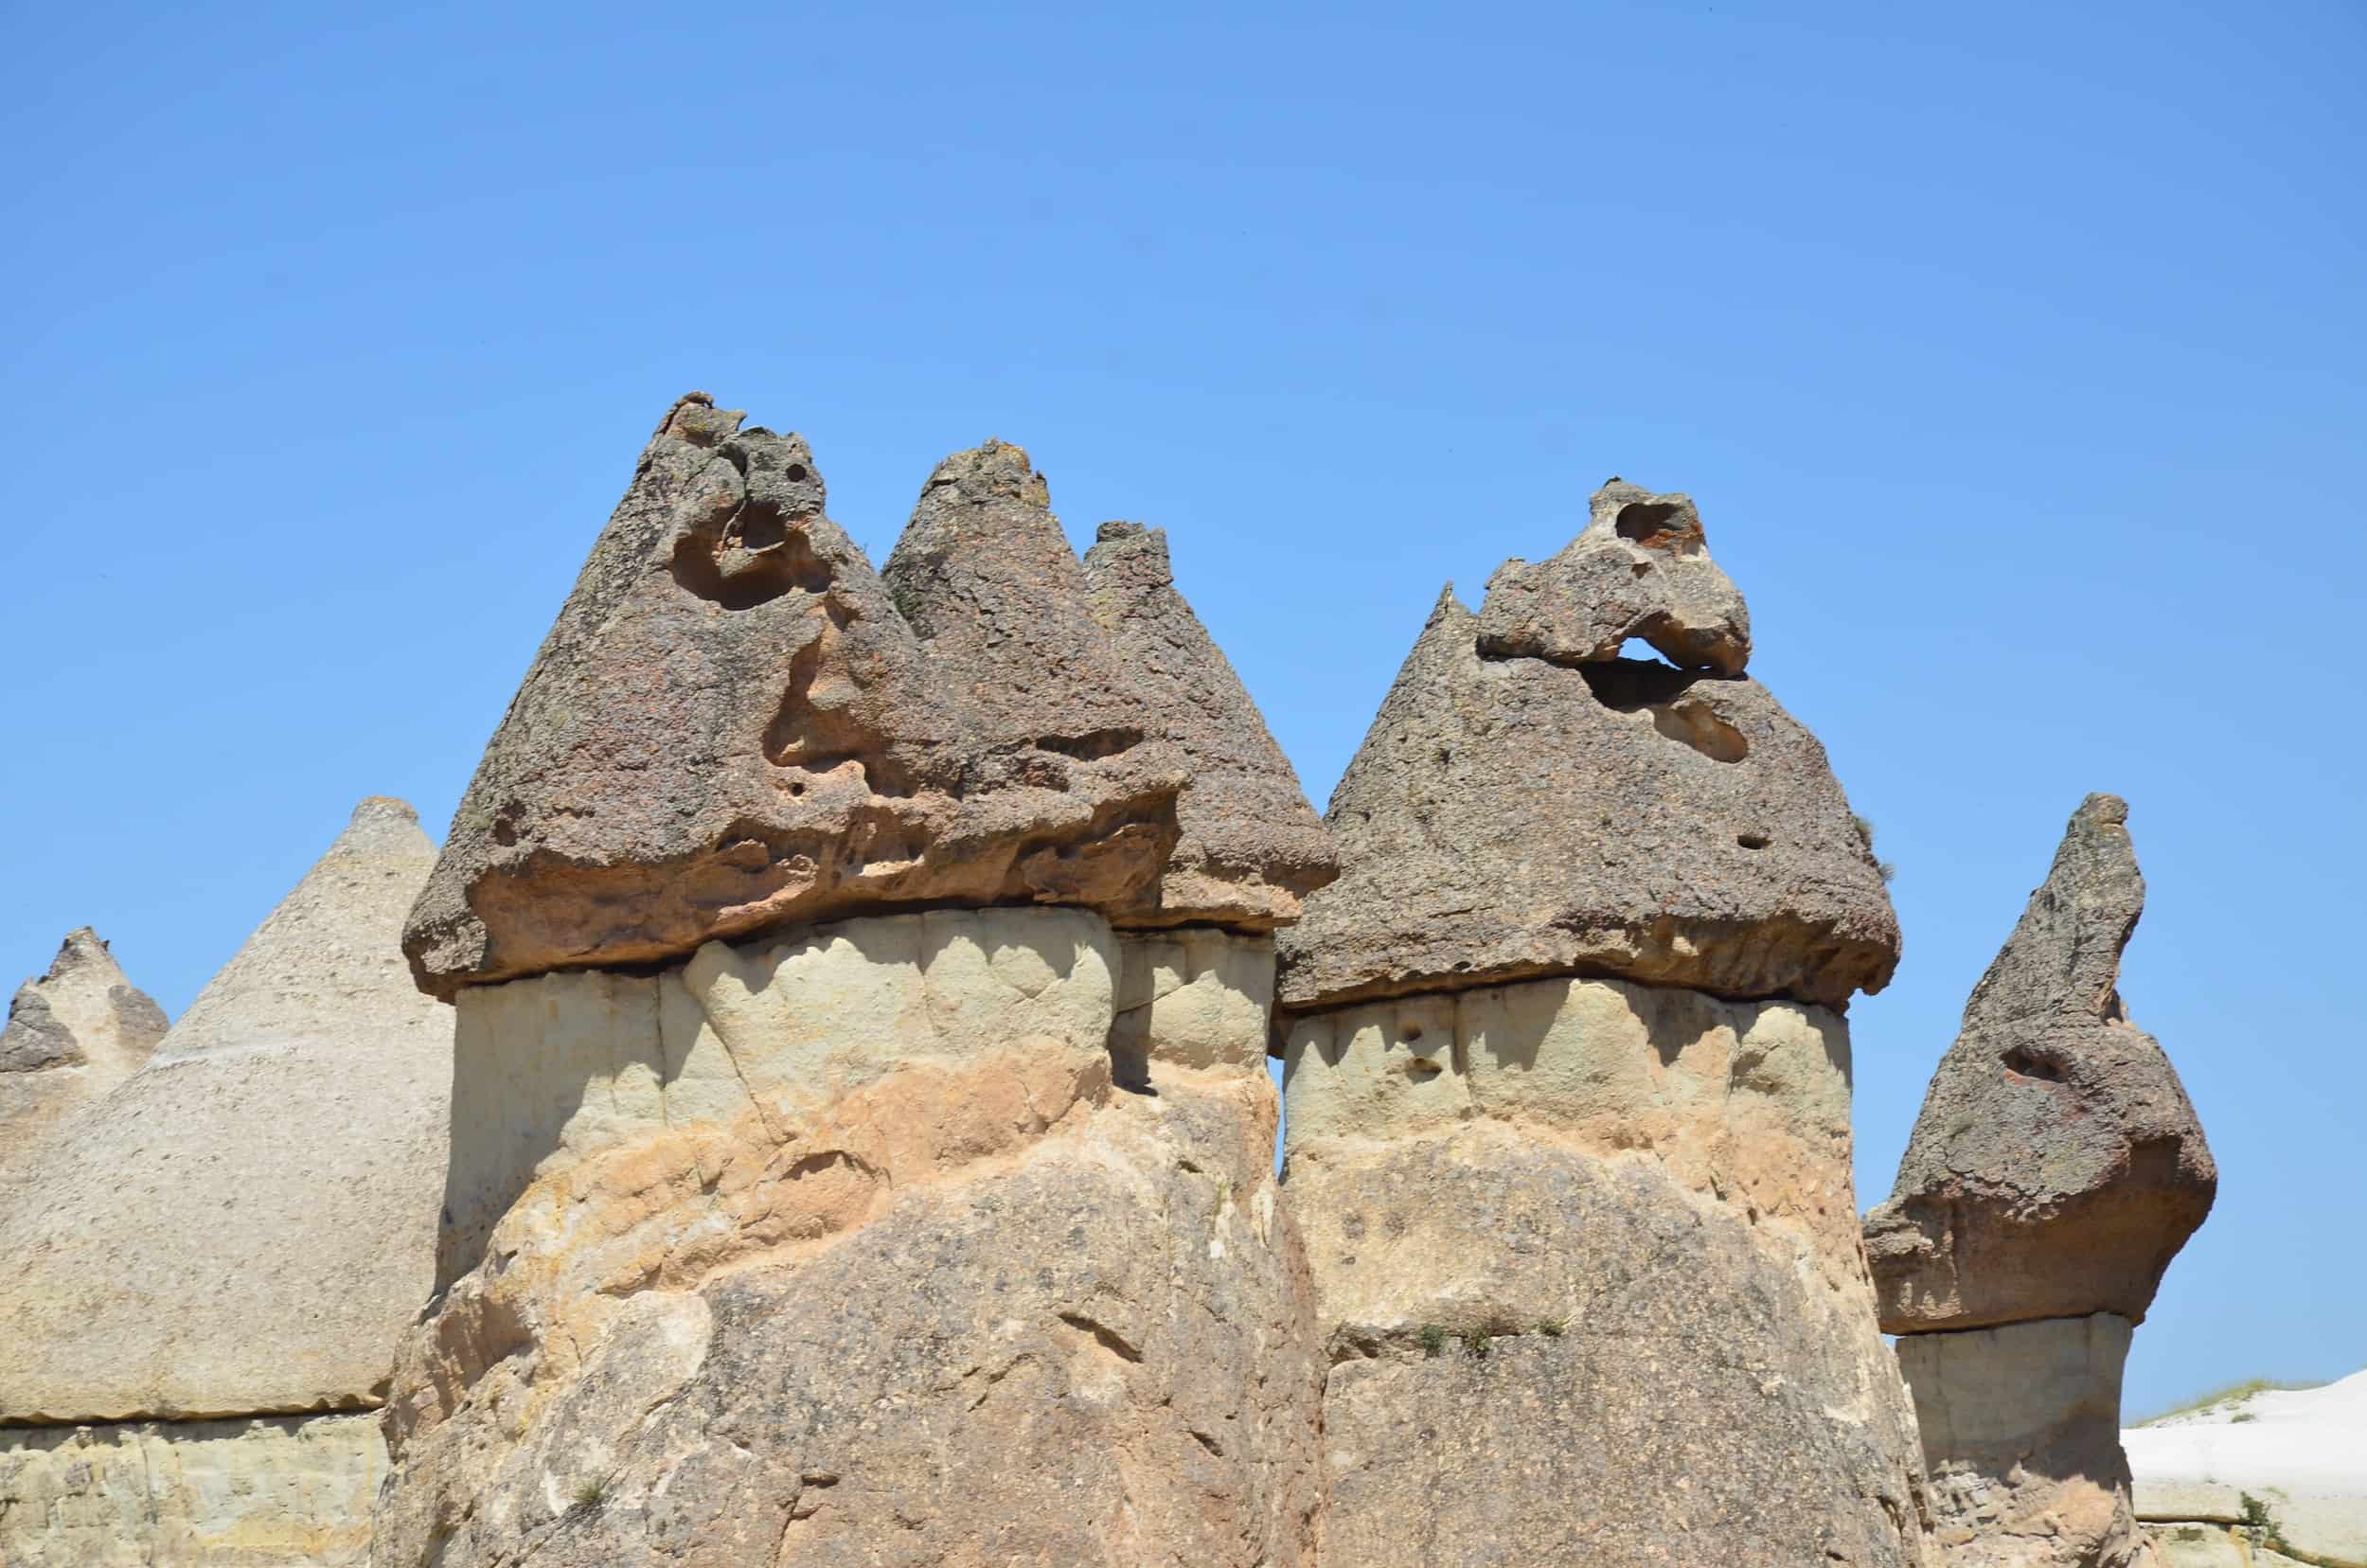 Mushroom caps at Paşabağ (Monk's Valley) in Cappadocia, Turkey